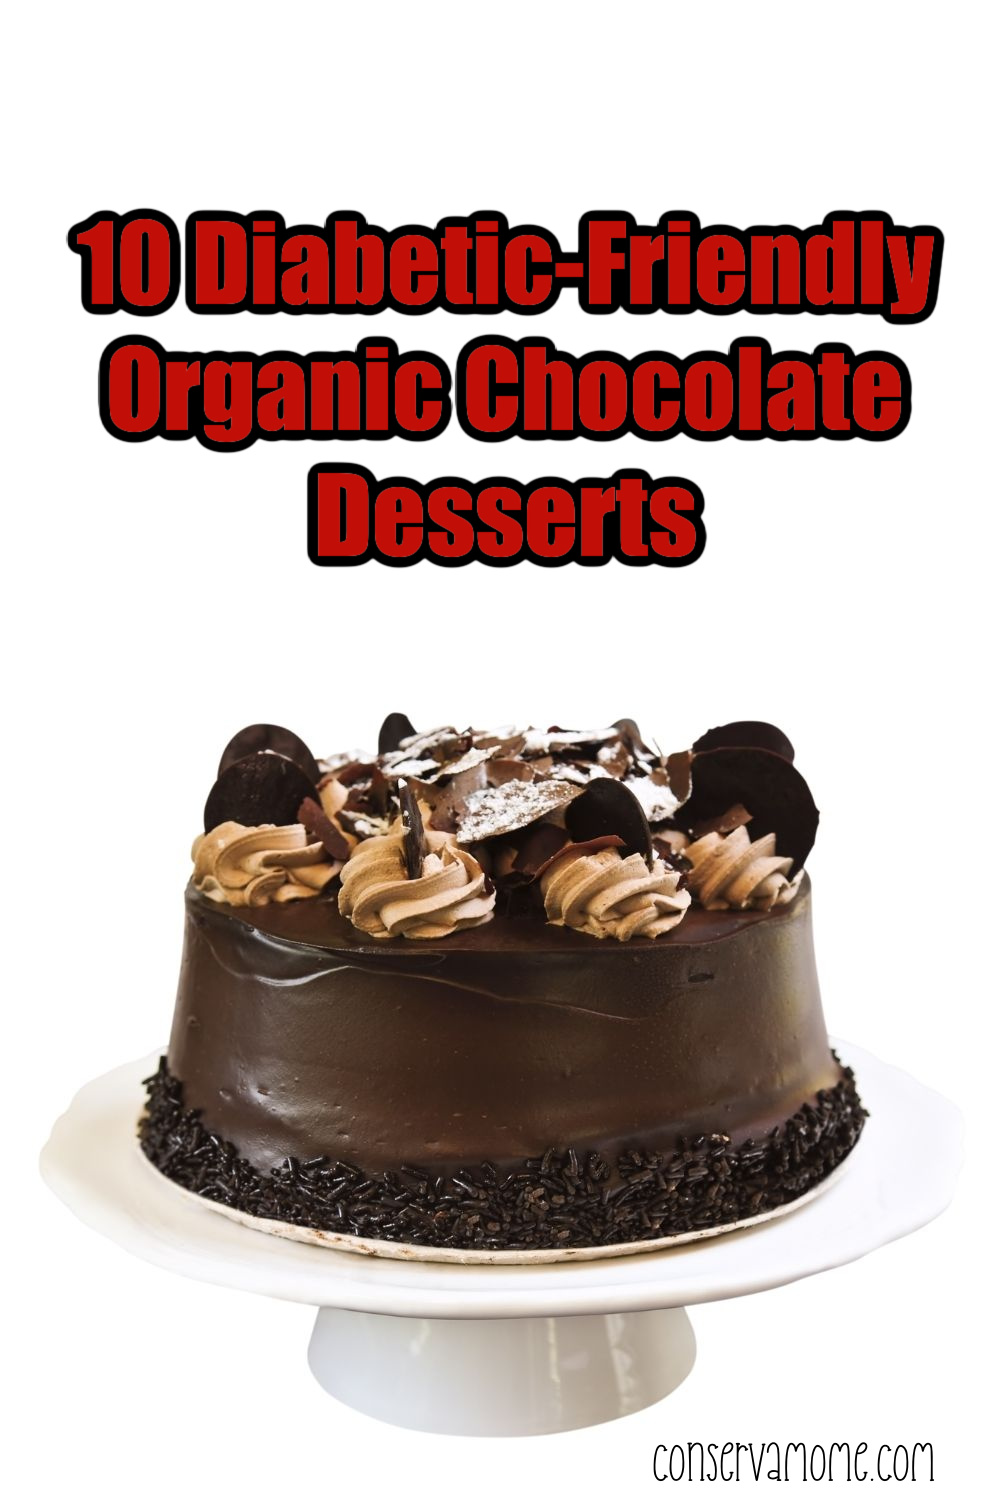  10 Diabetic-Friendly Organic Chocolate Desserts 